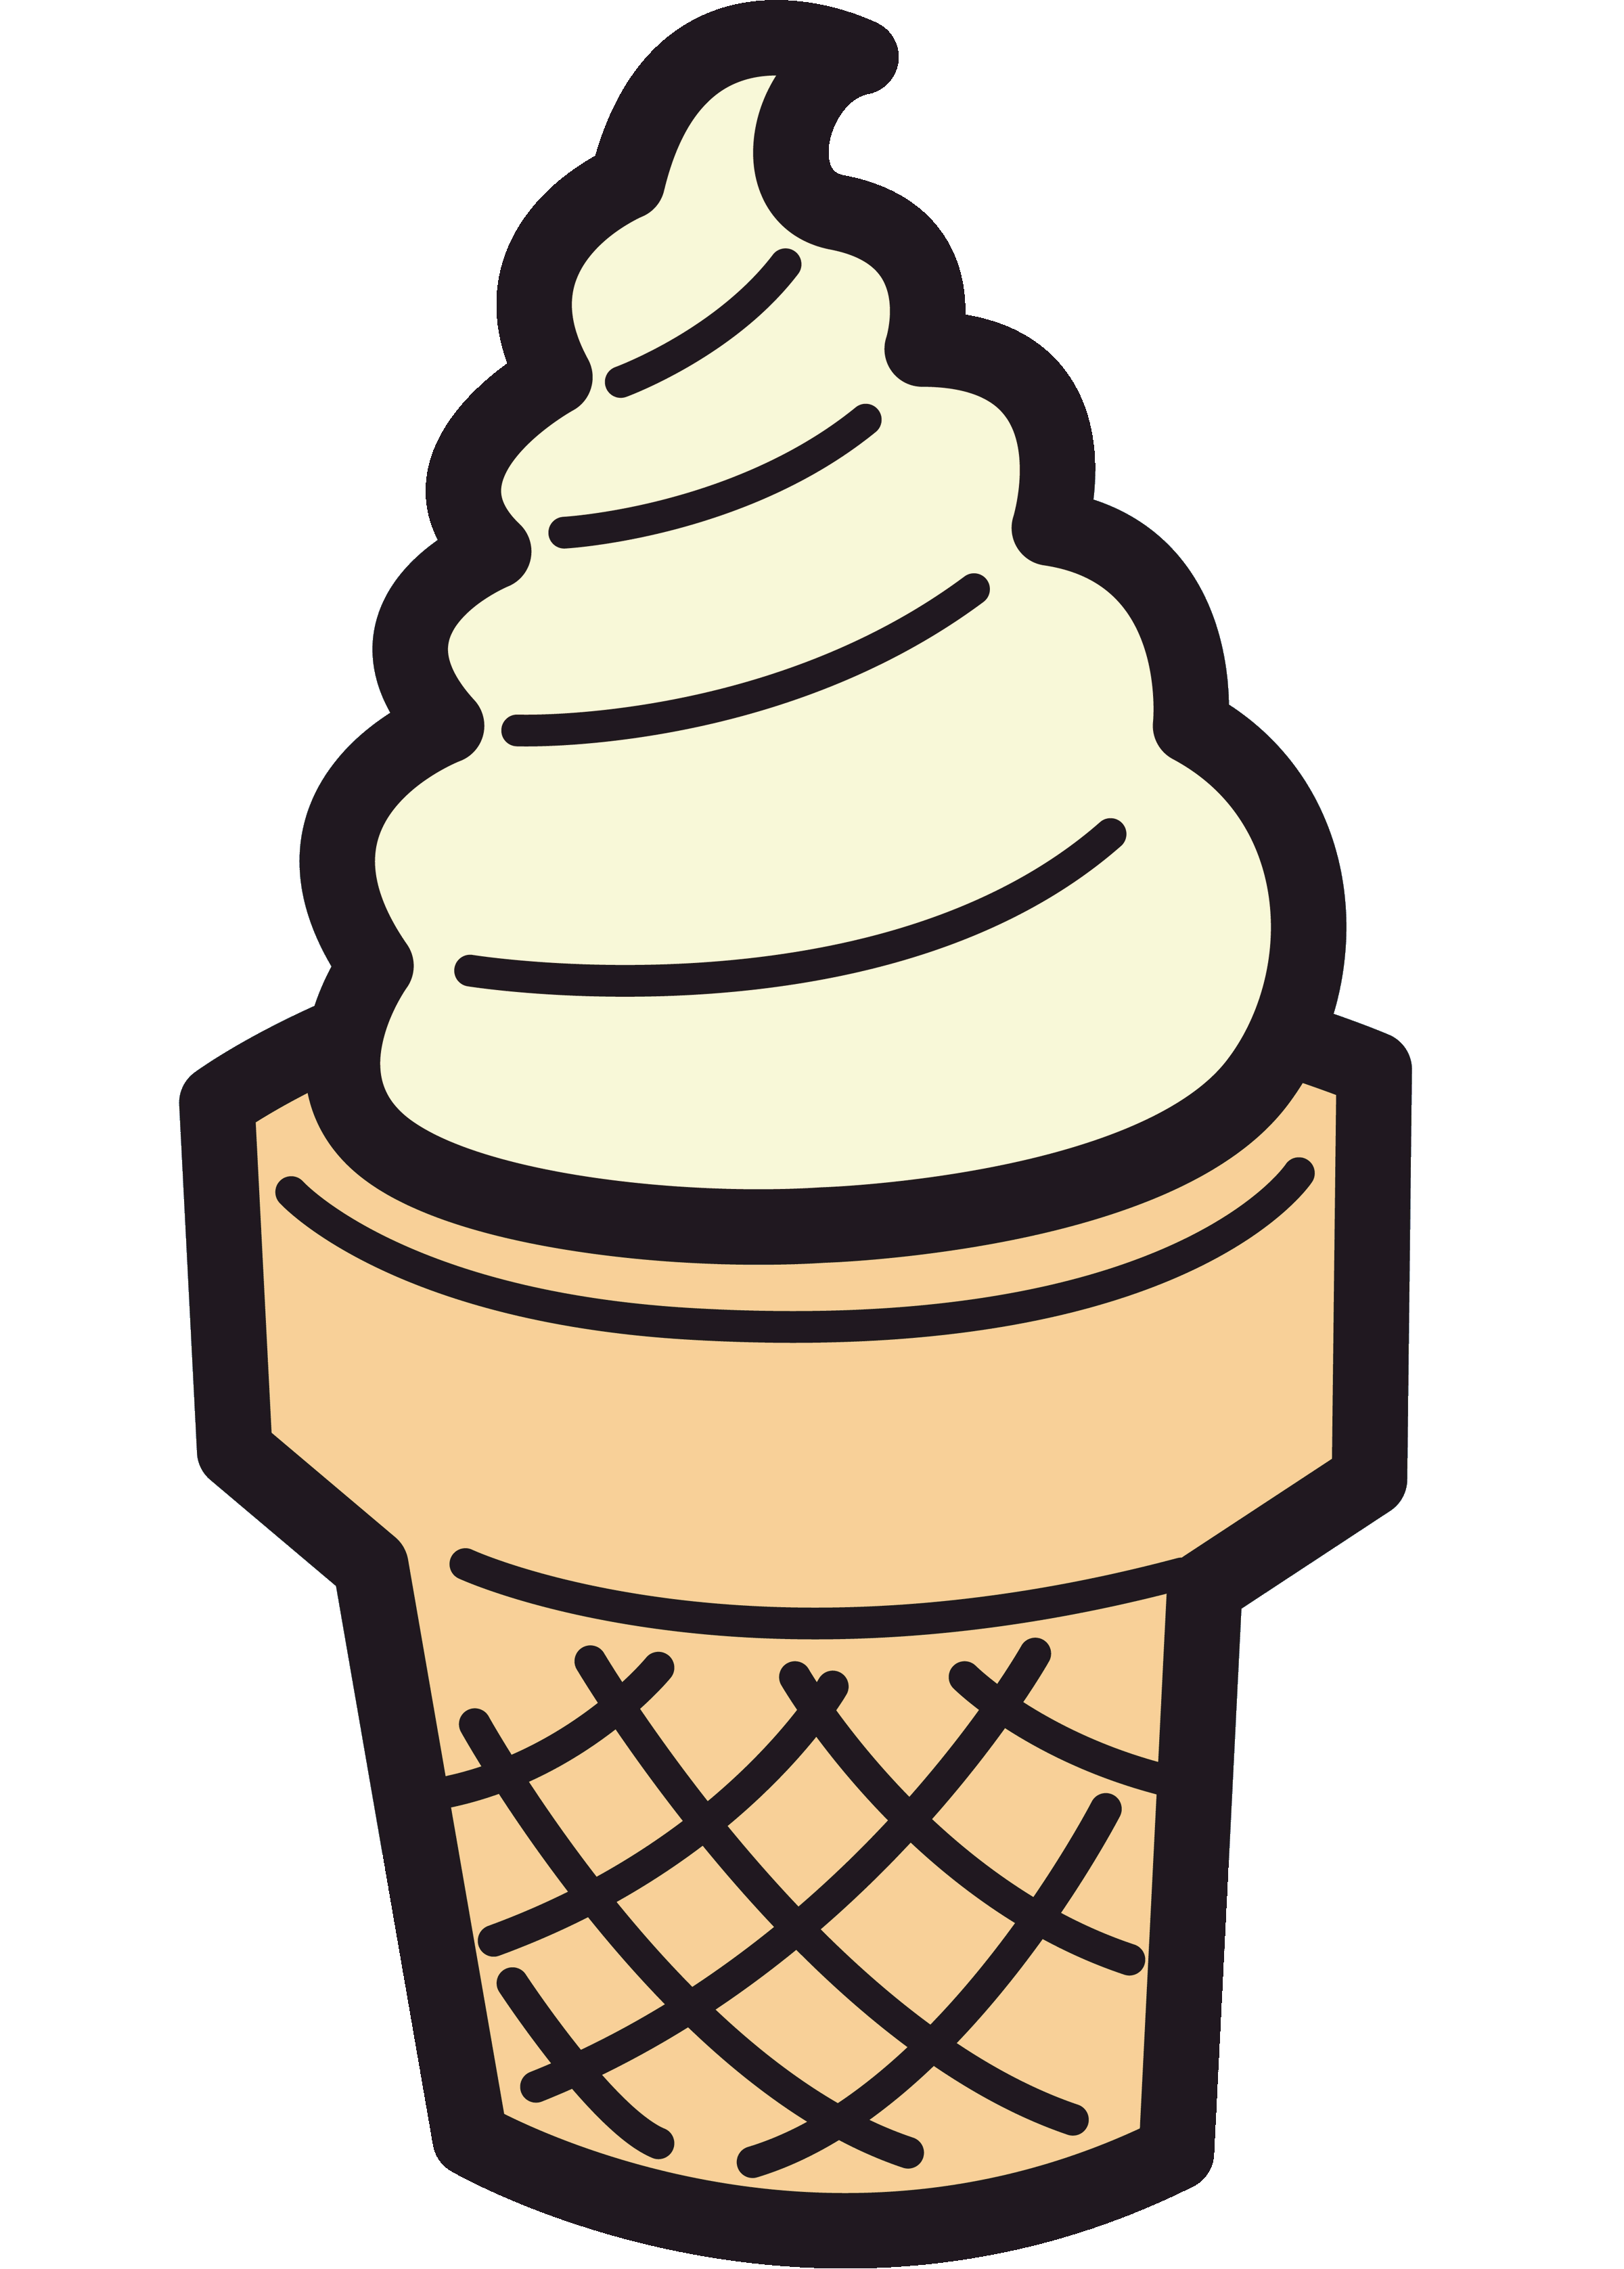 Ice Cream Cone Clipart   Clipart Panda   Free Clipart Images